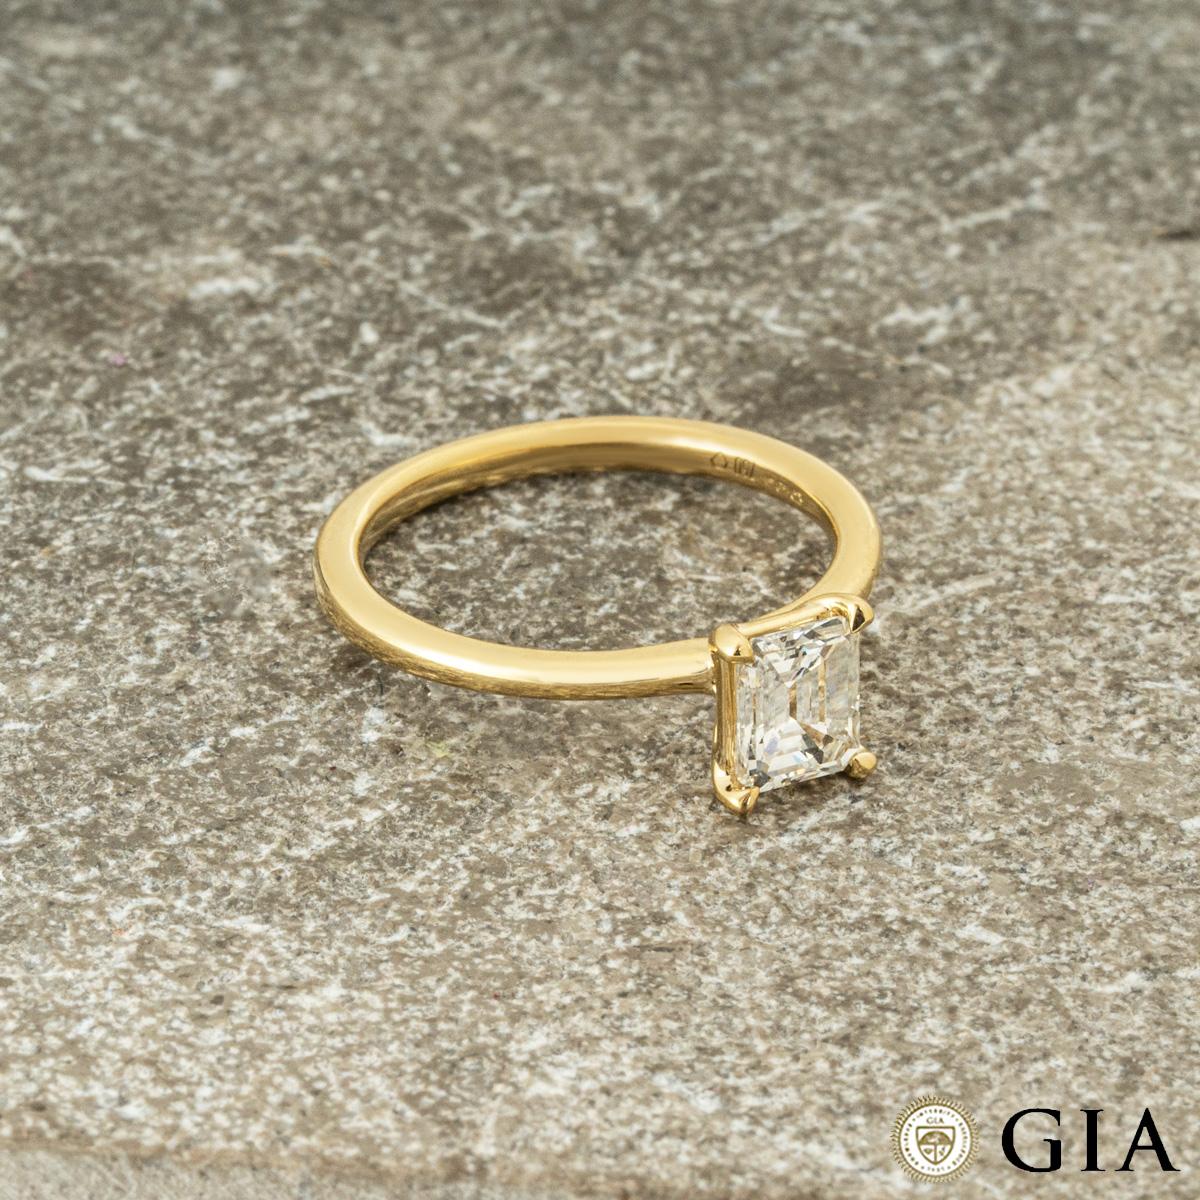 GIA Certified Yellow Gold Emerald Cut Diamond Ring 0.83 Carat E/VS1 For Sale 4